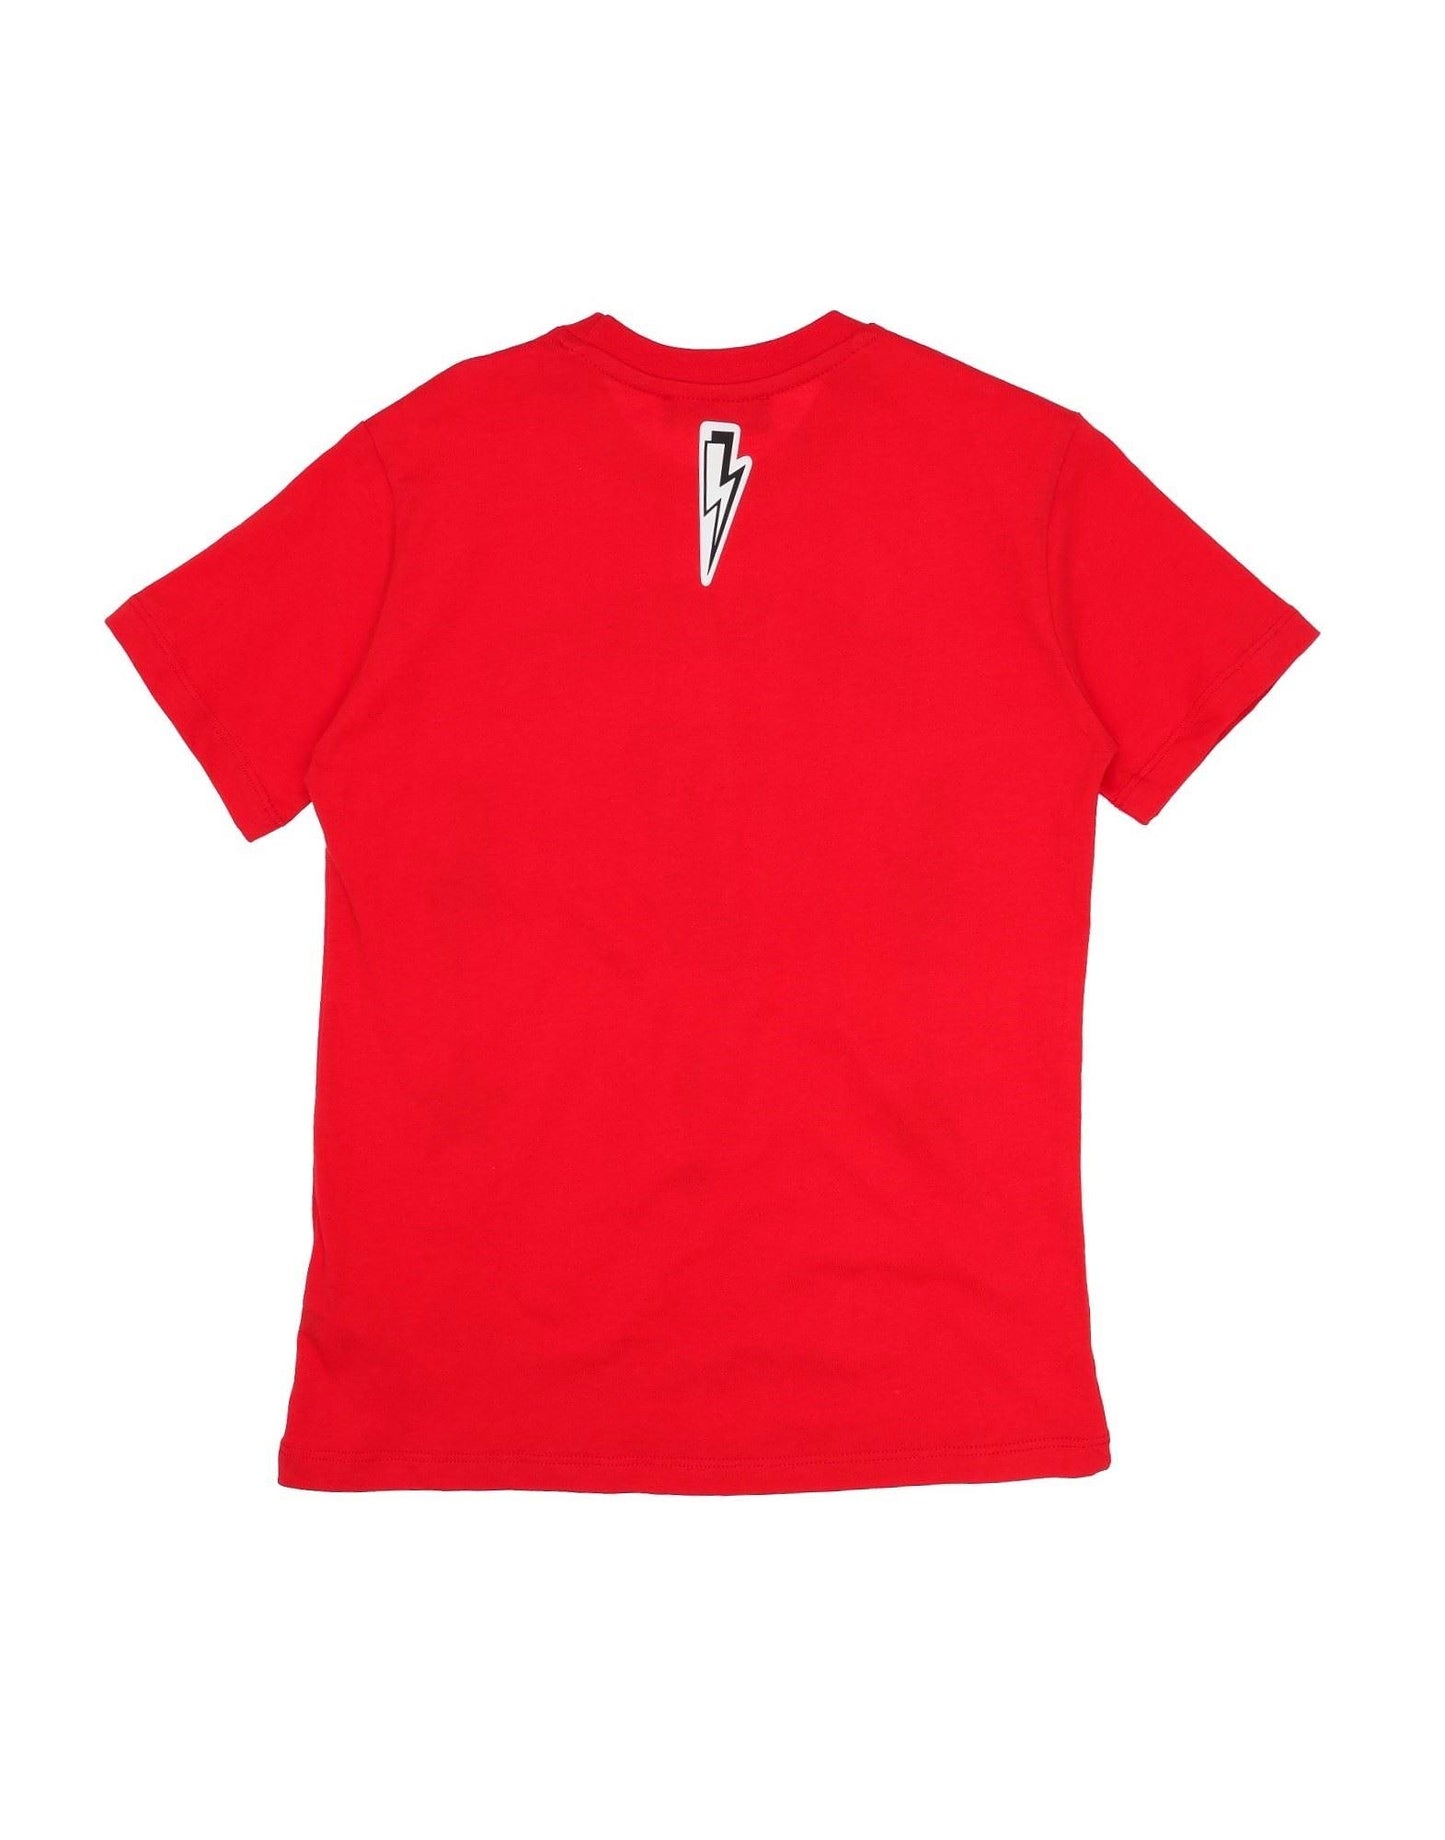 Red 7 Print Logo T-Shirt